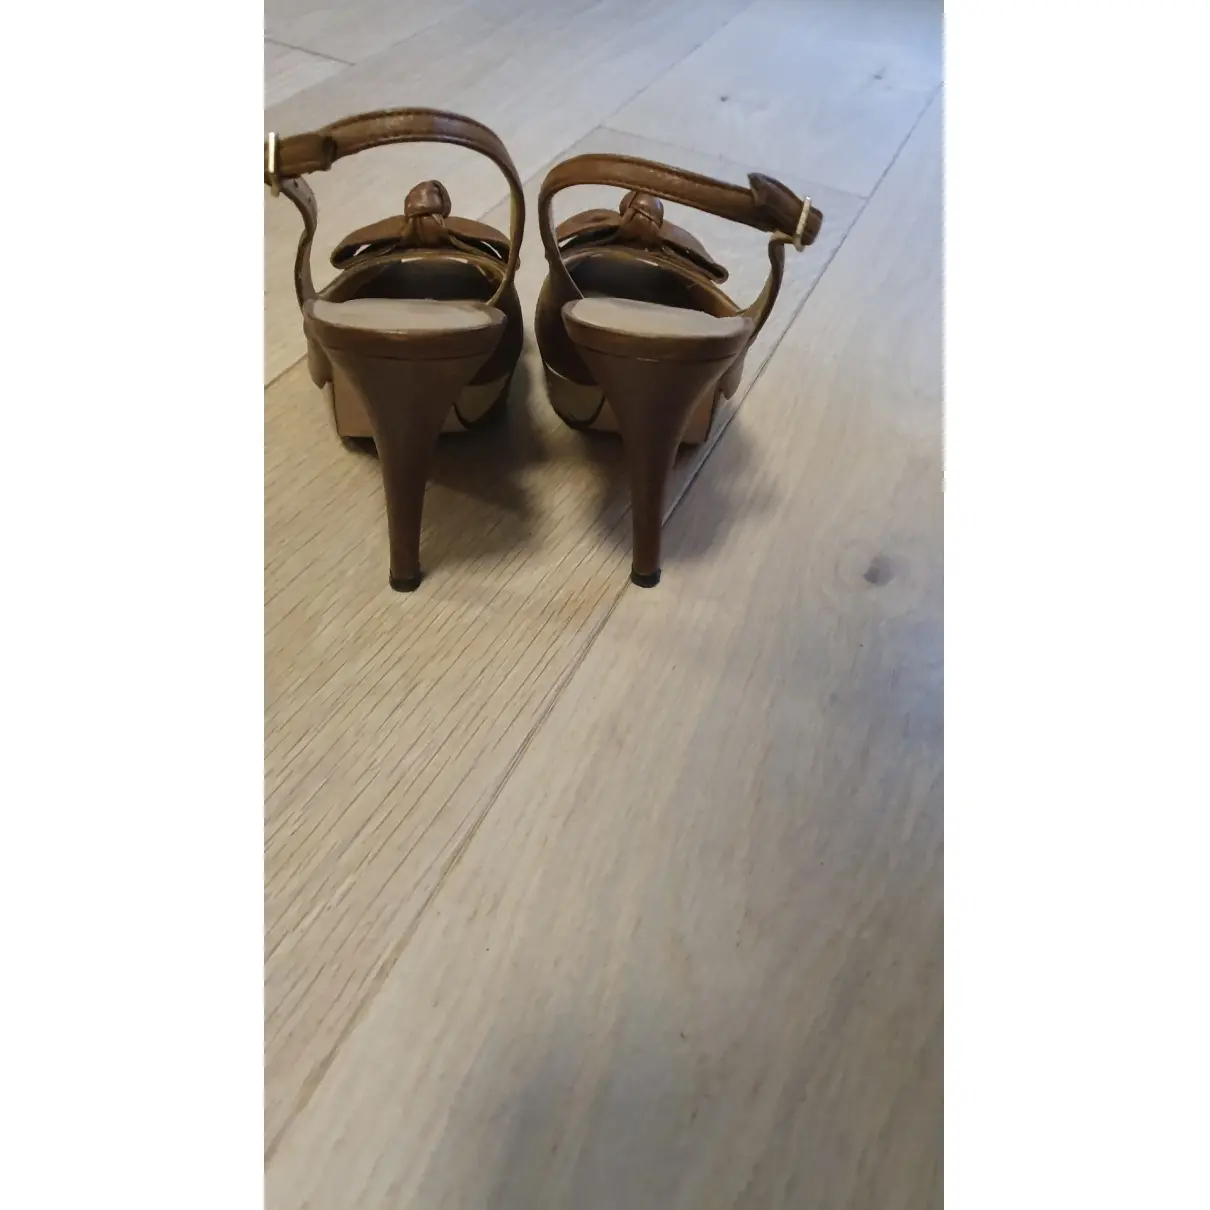 Stuart Weitzman Leather sandals for sale